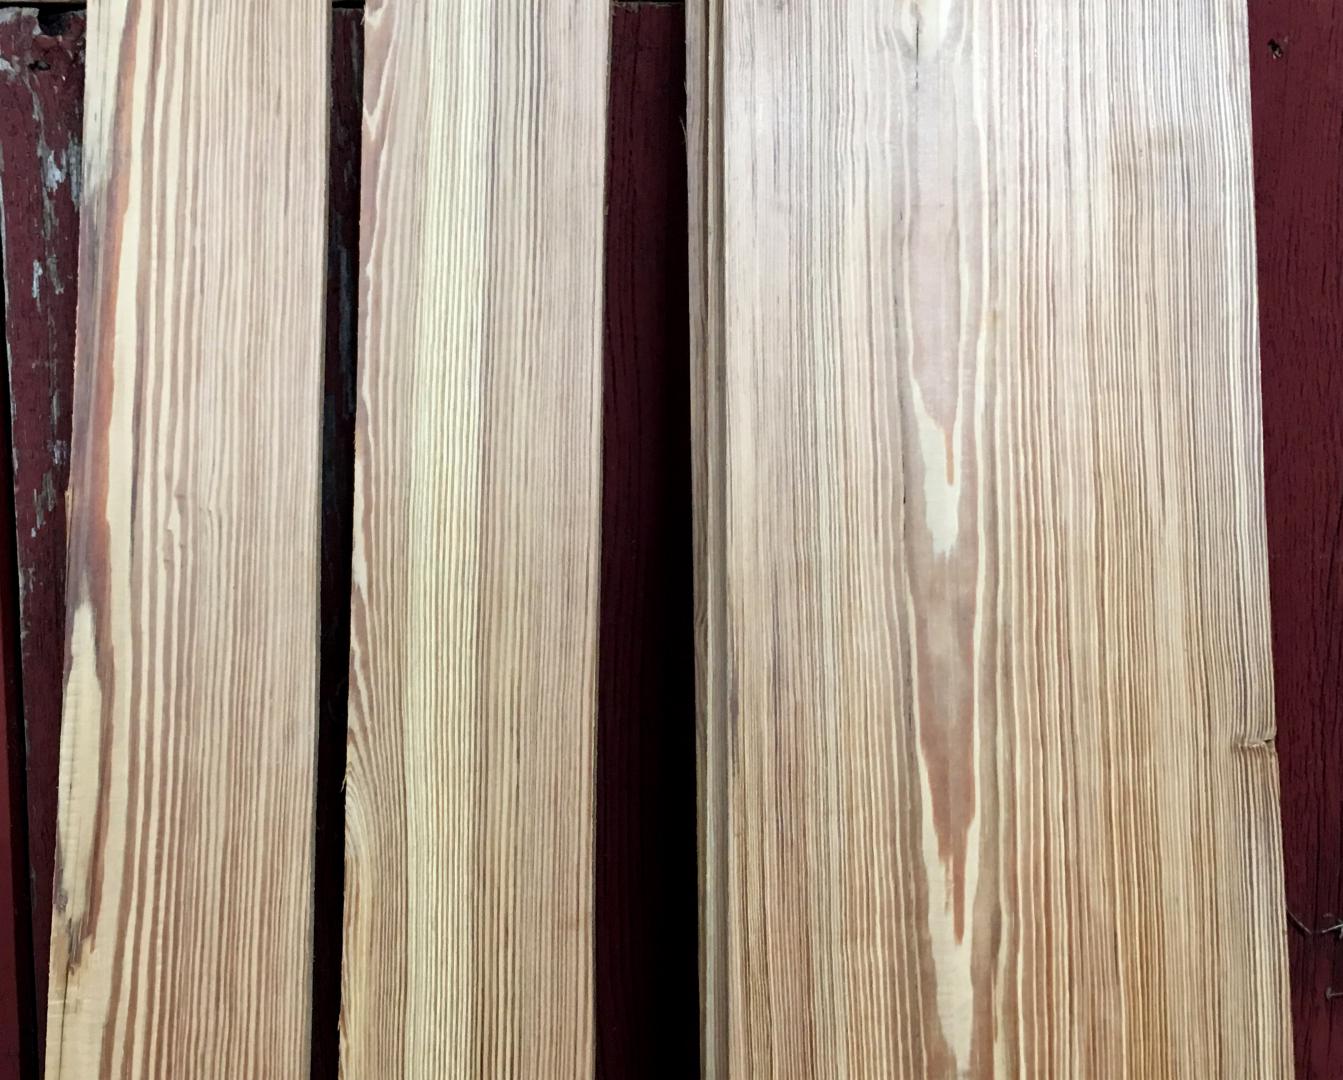 Wide plank heart pine lumber